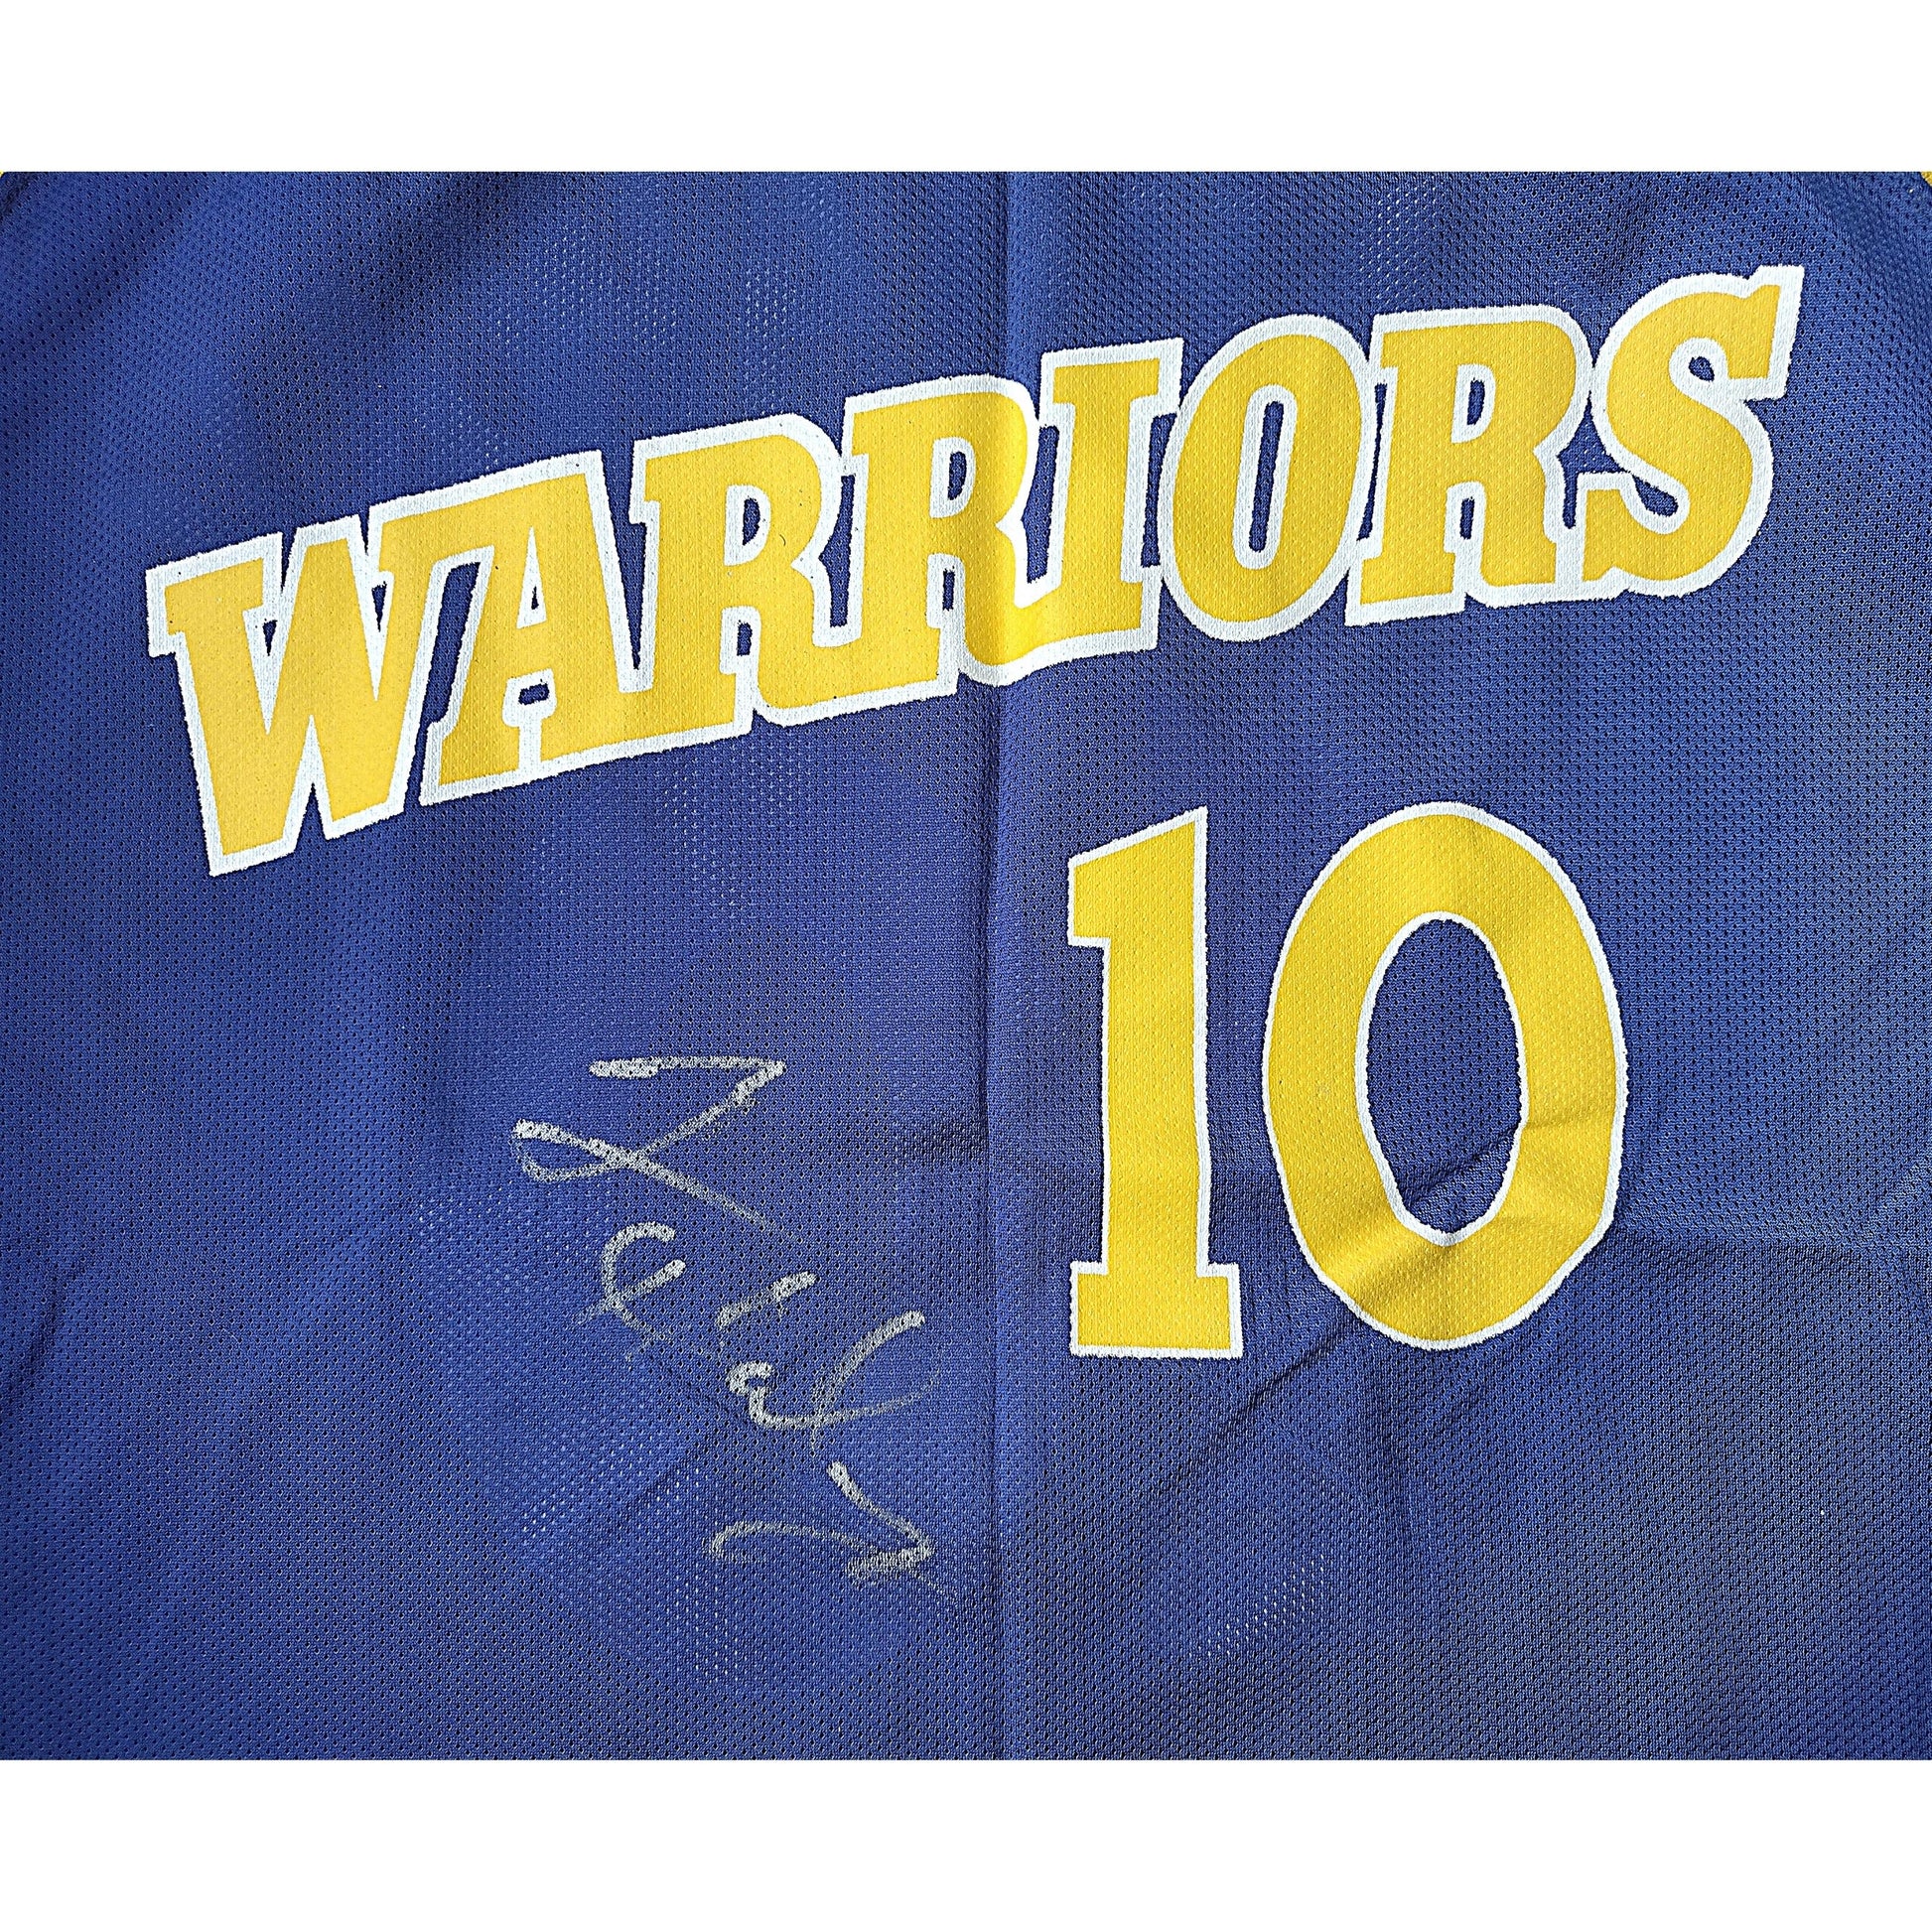 Gary Payton II Signed jersey PSA/DNA Golden State Warriors